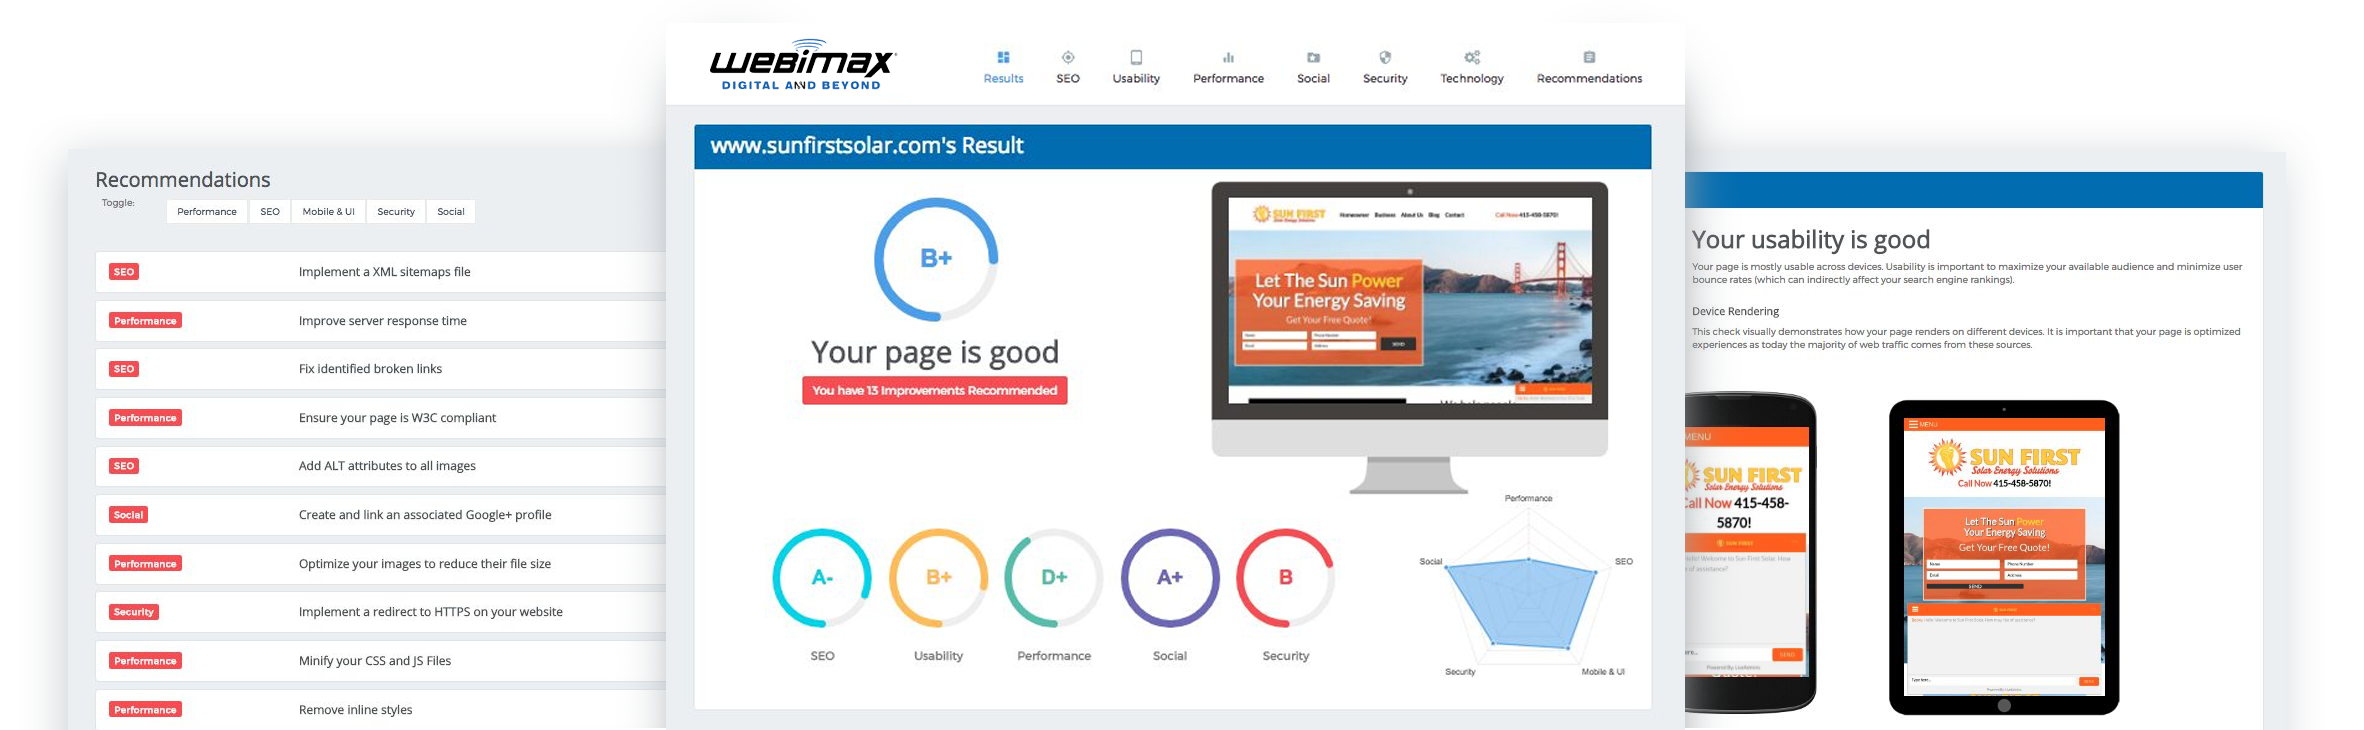 free website analysis tool by webimax